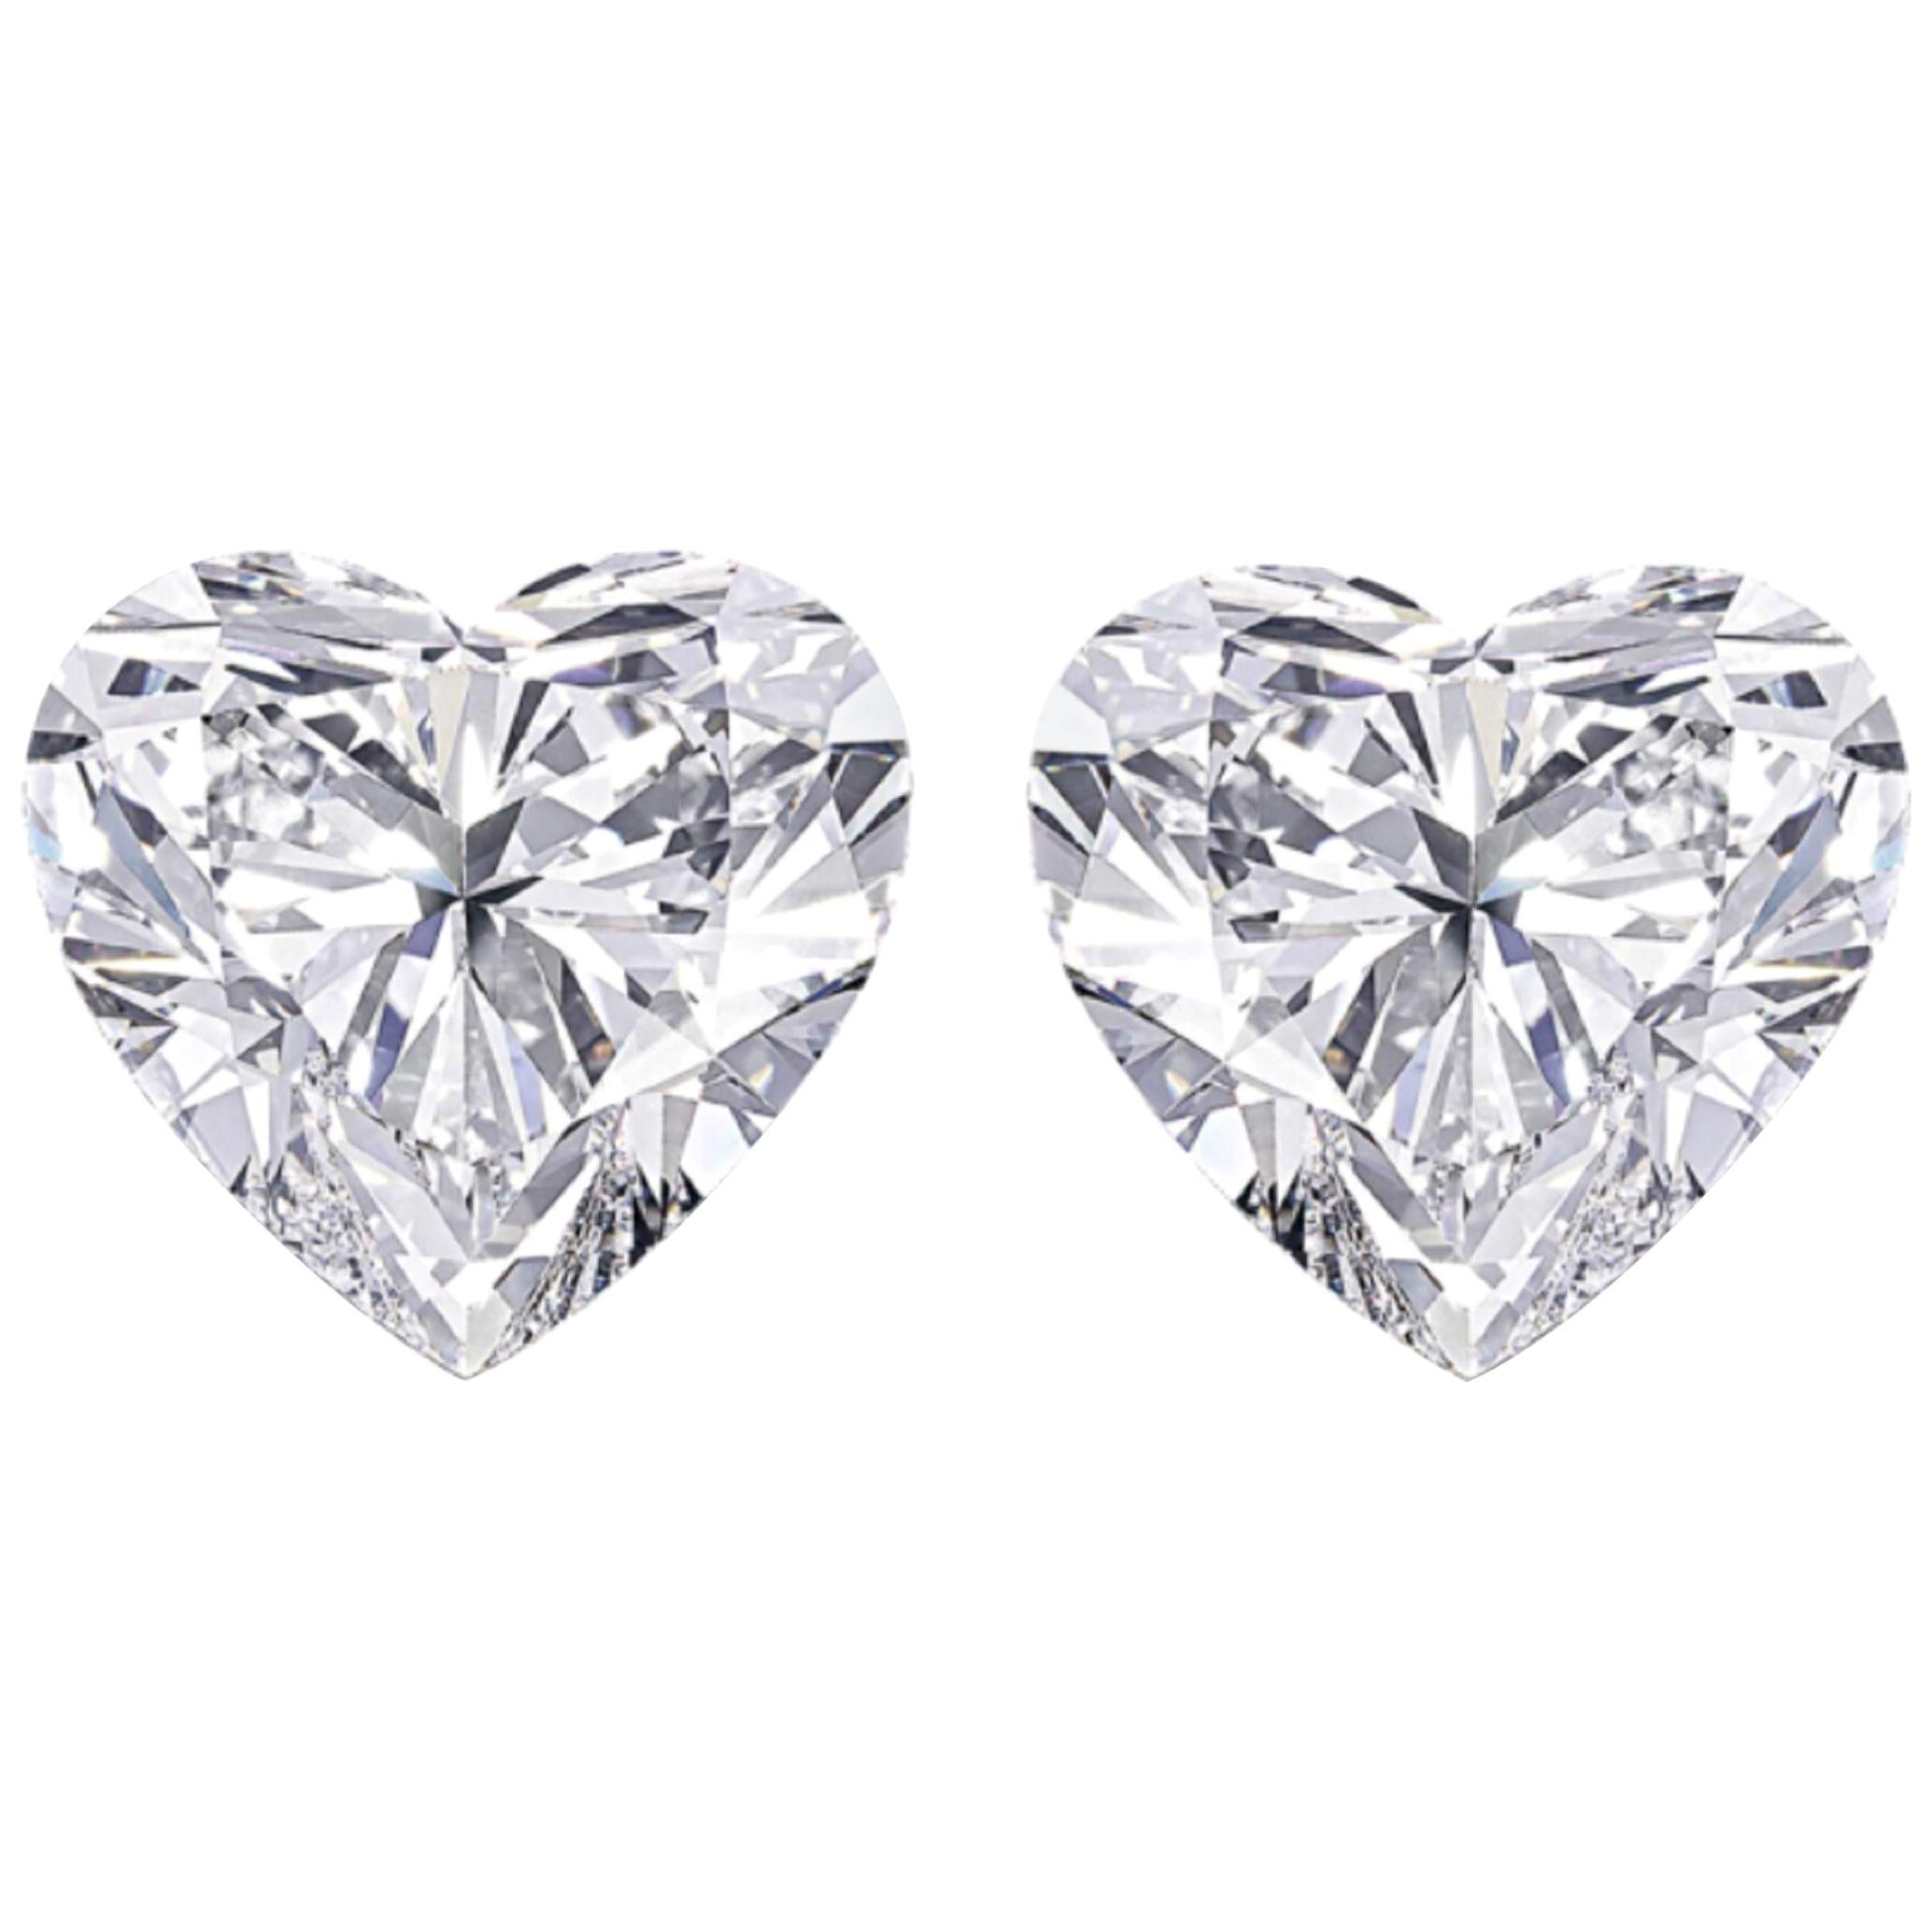 Flawless E Color Heart Shape Diamond 2.66 Carat Studs